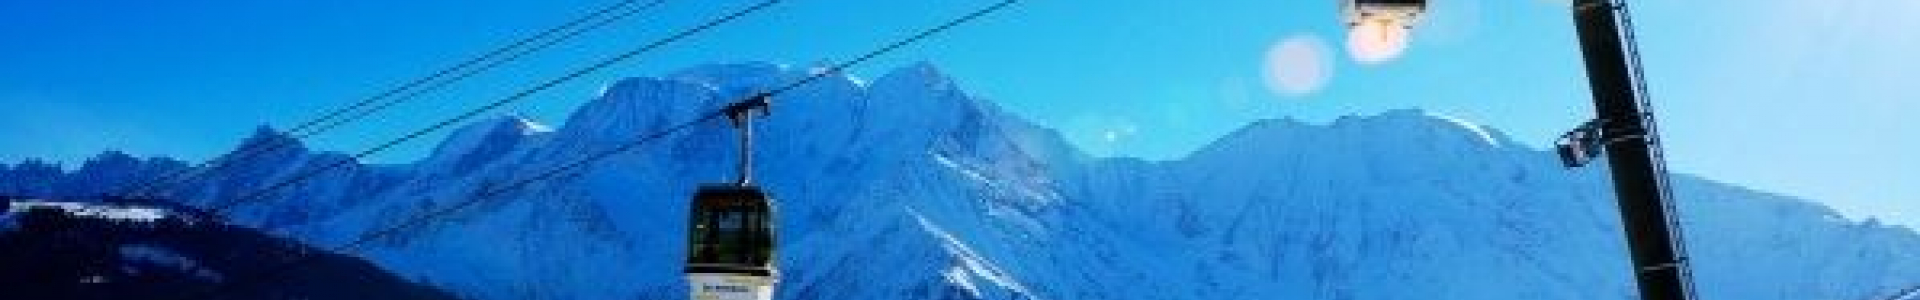 Skigloo : promo ski, bons plans locations et packages, jusqu'à - 40%